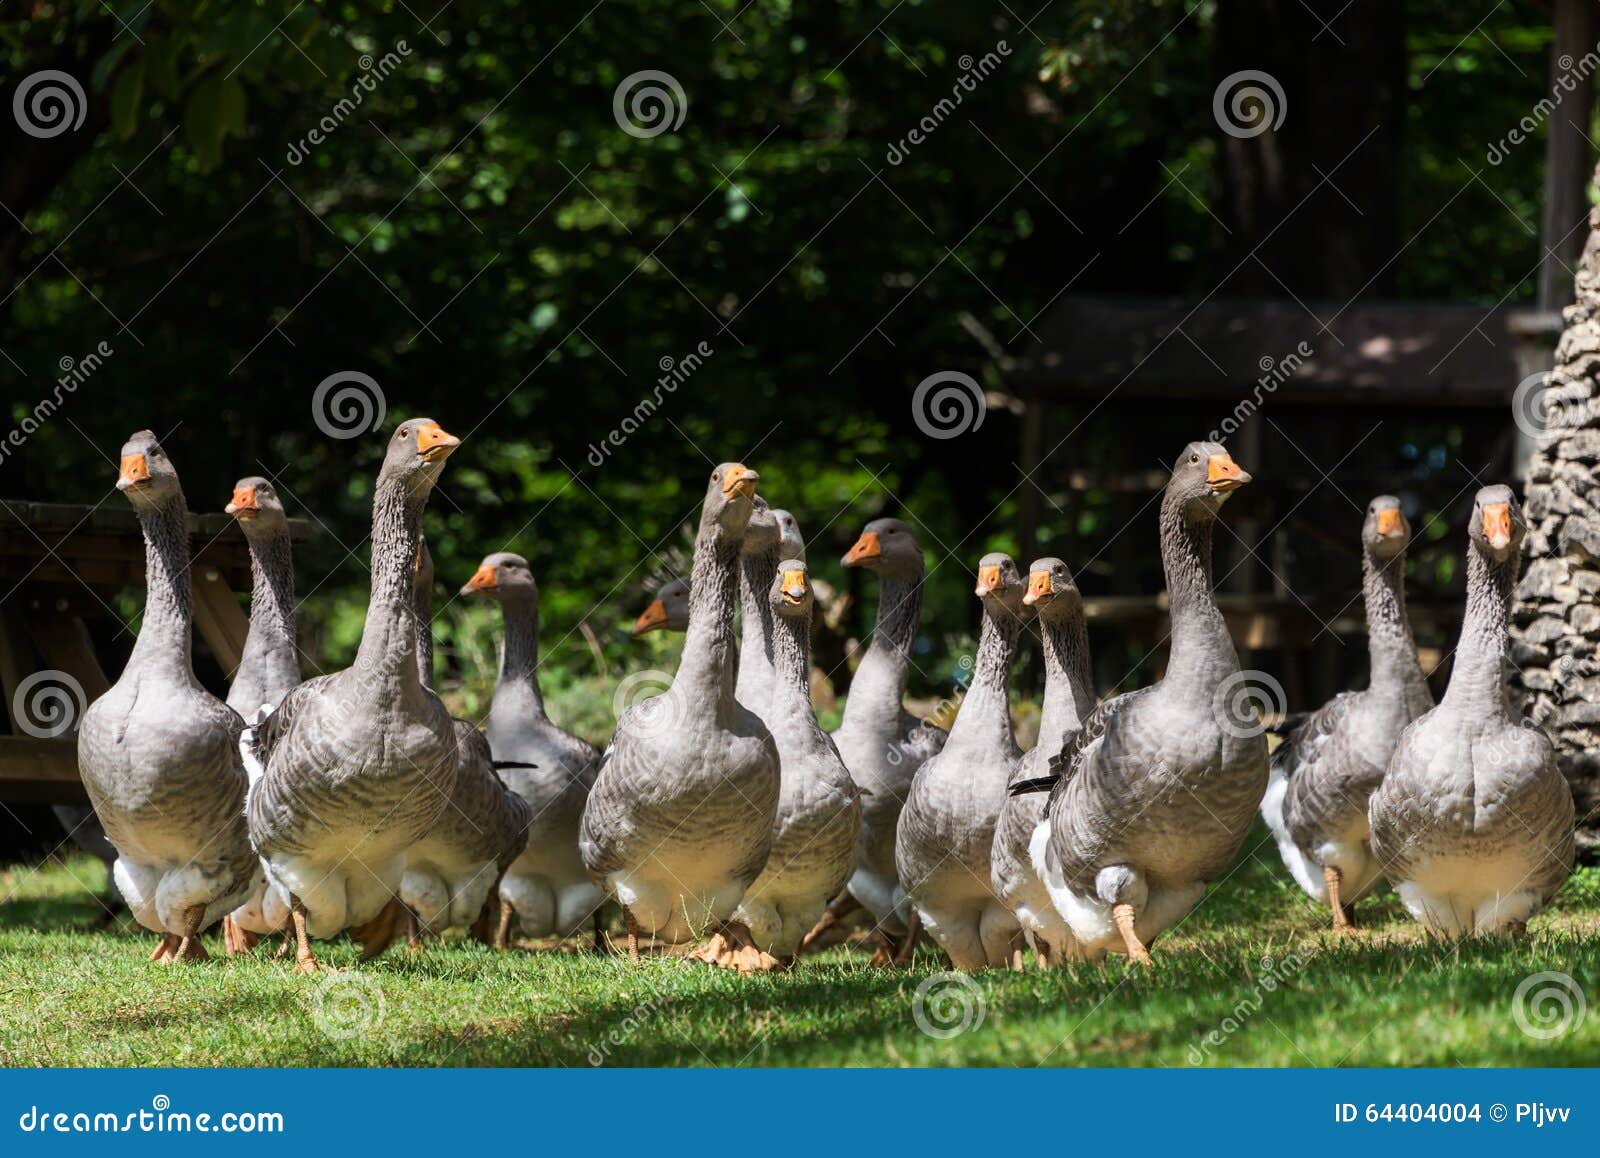 foie gras geese at the goose farm